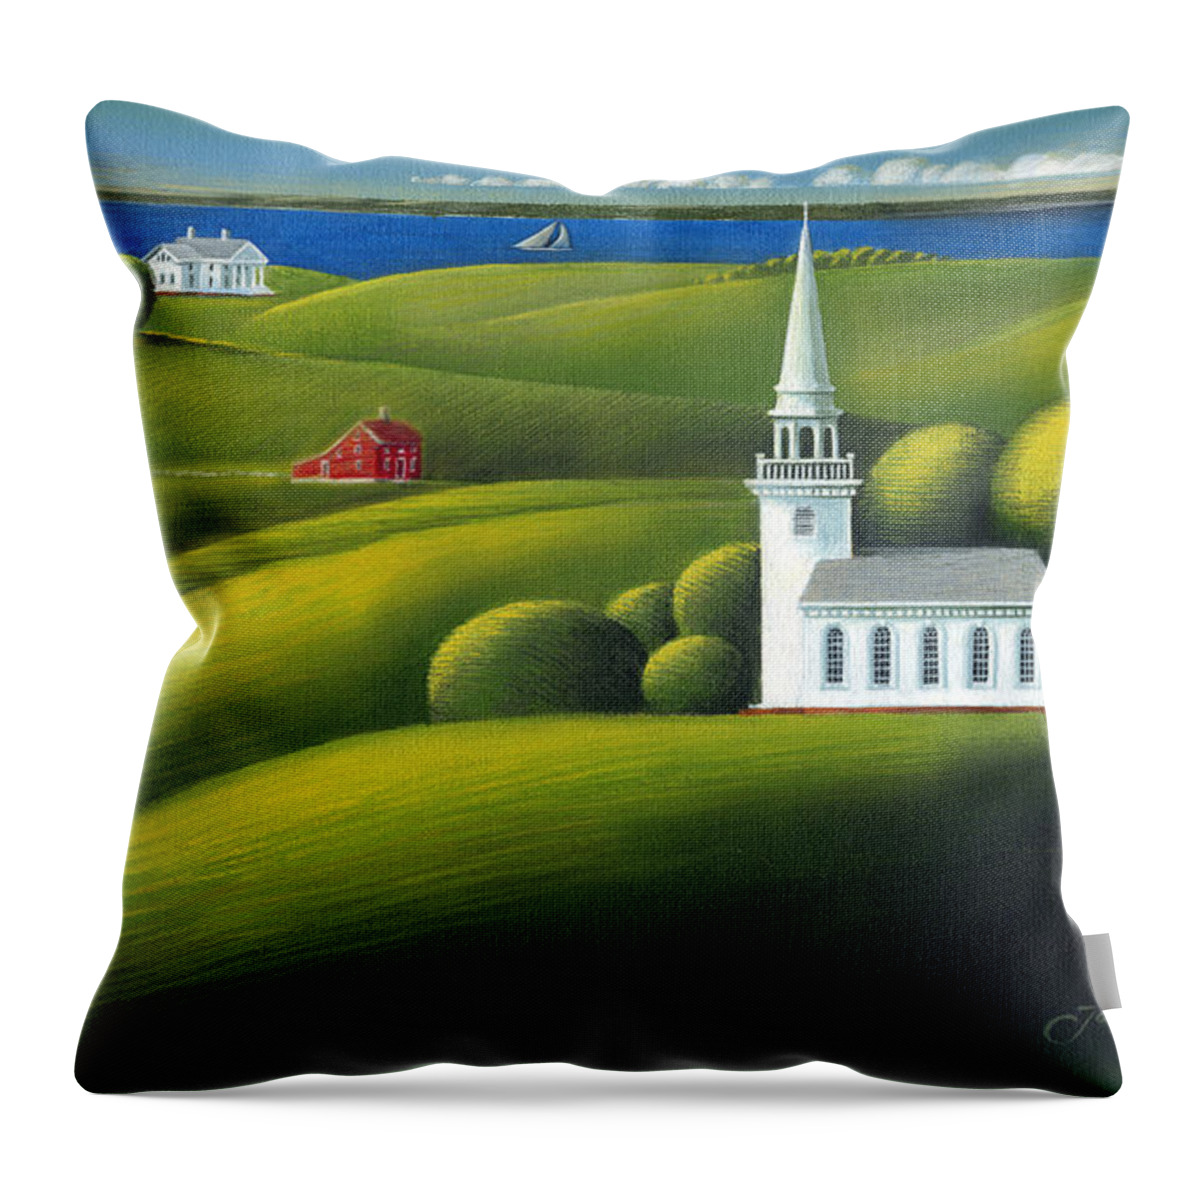 Deecken Throw Pillow featuring the painting View of the Sound by John Deecken